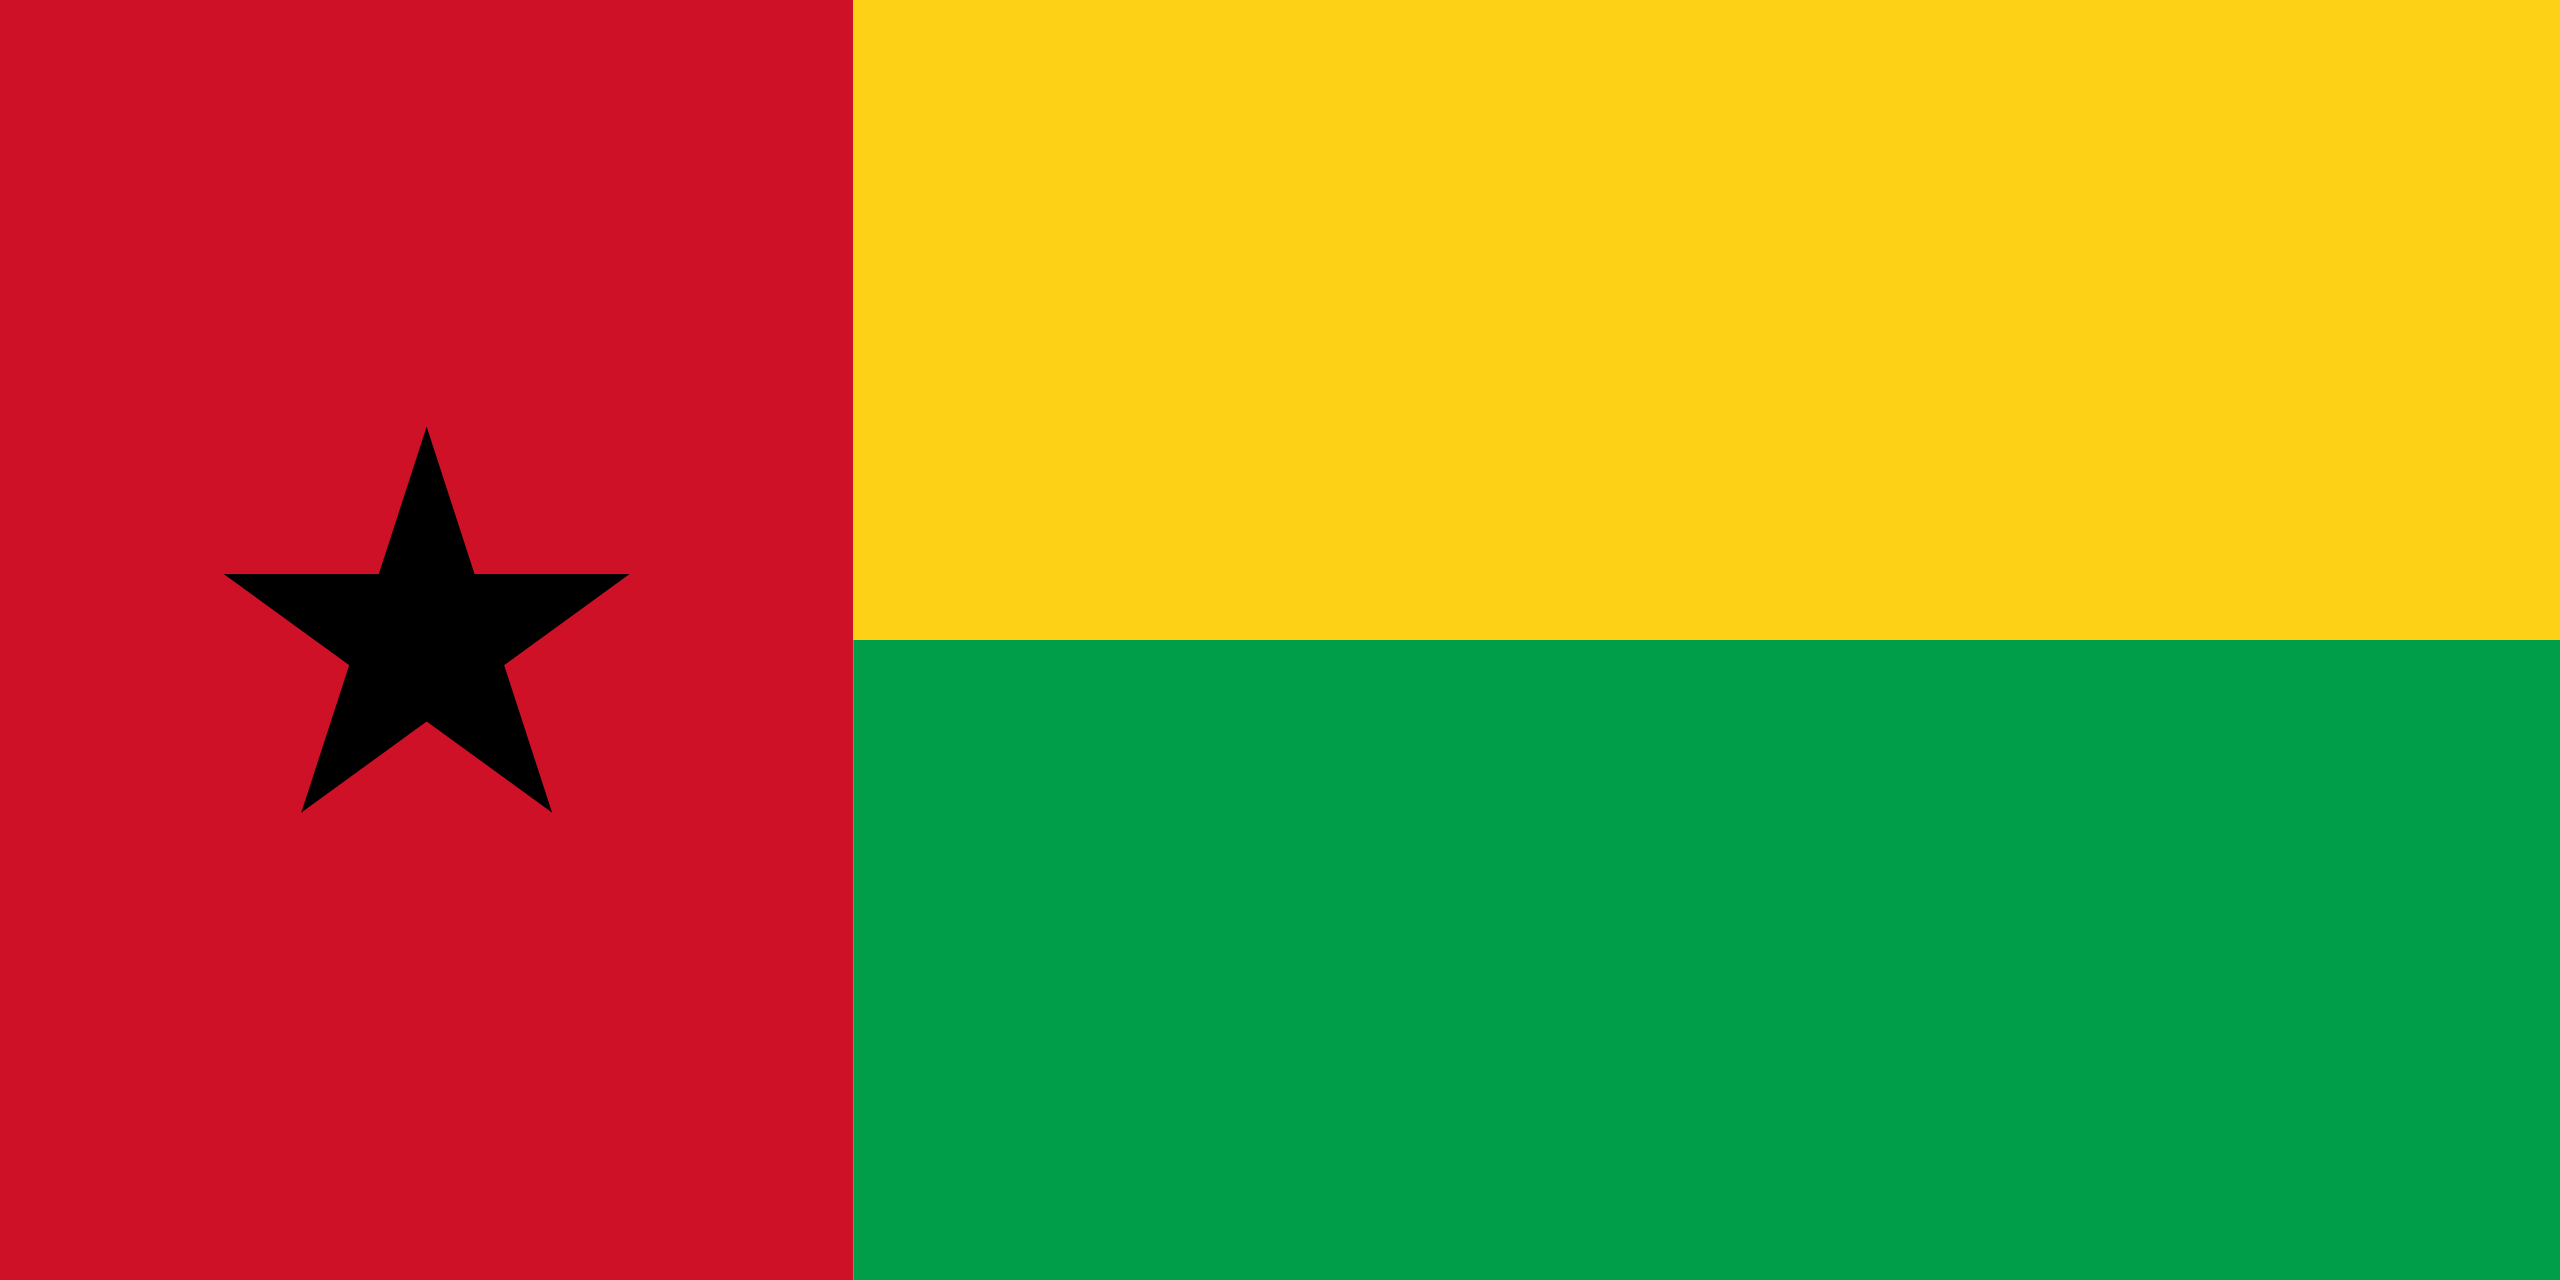 Guinea-Bissau's flag